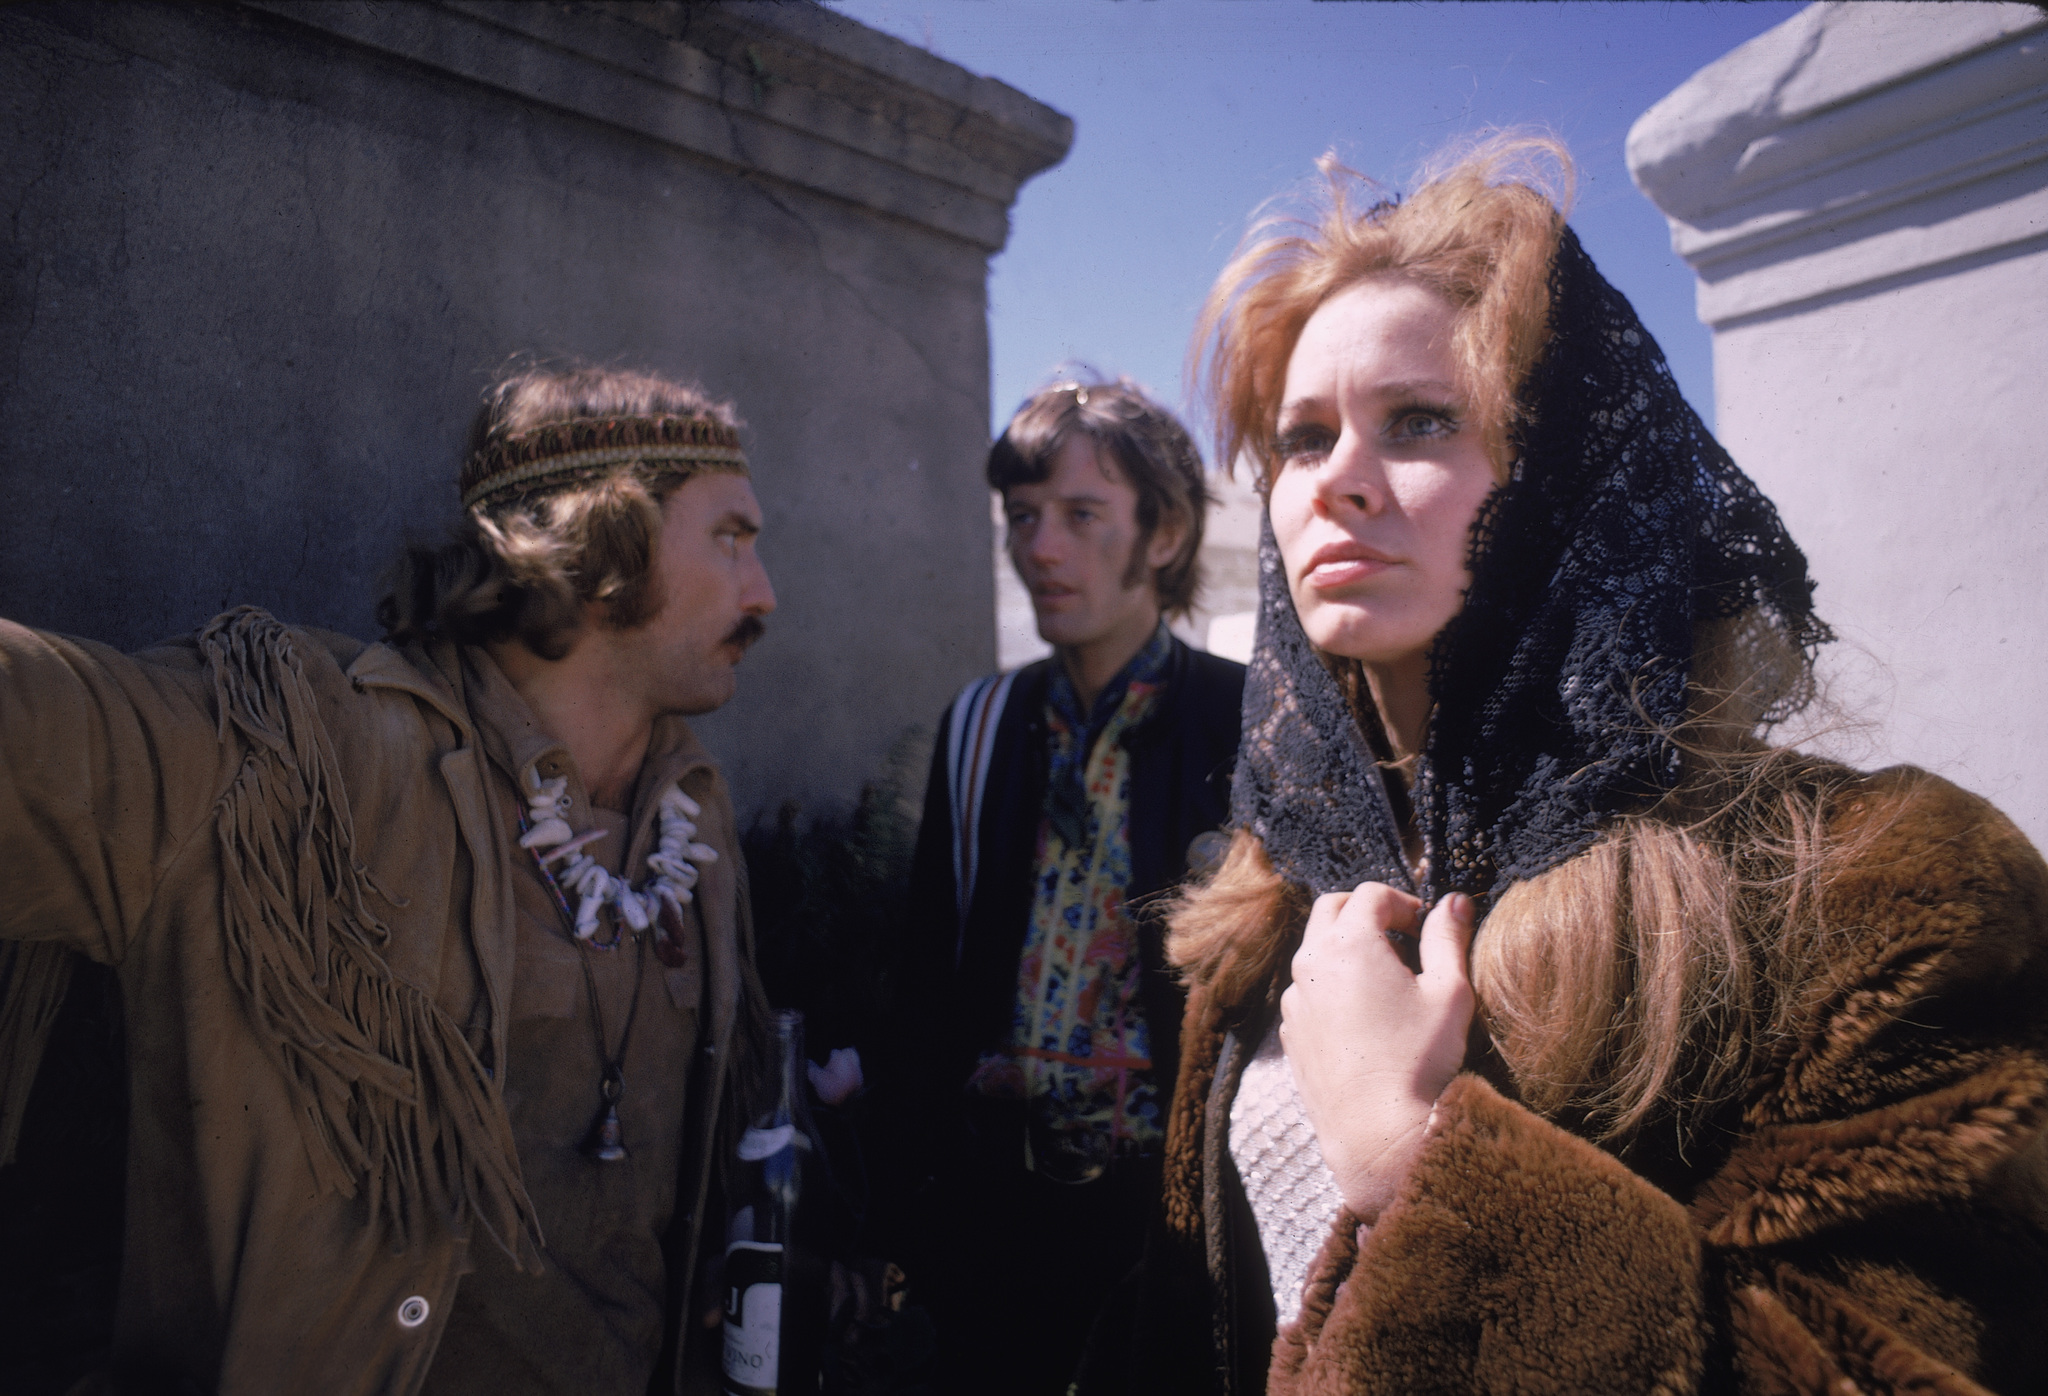 Dennis Hopper, Karen Black and Peter Fonda at event of Easy Rider (1969)